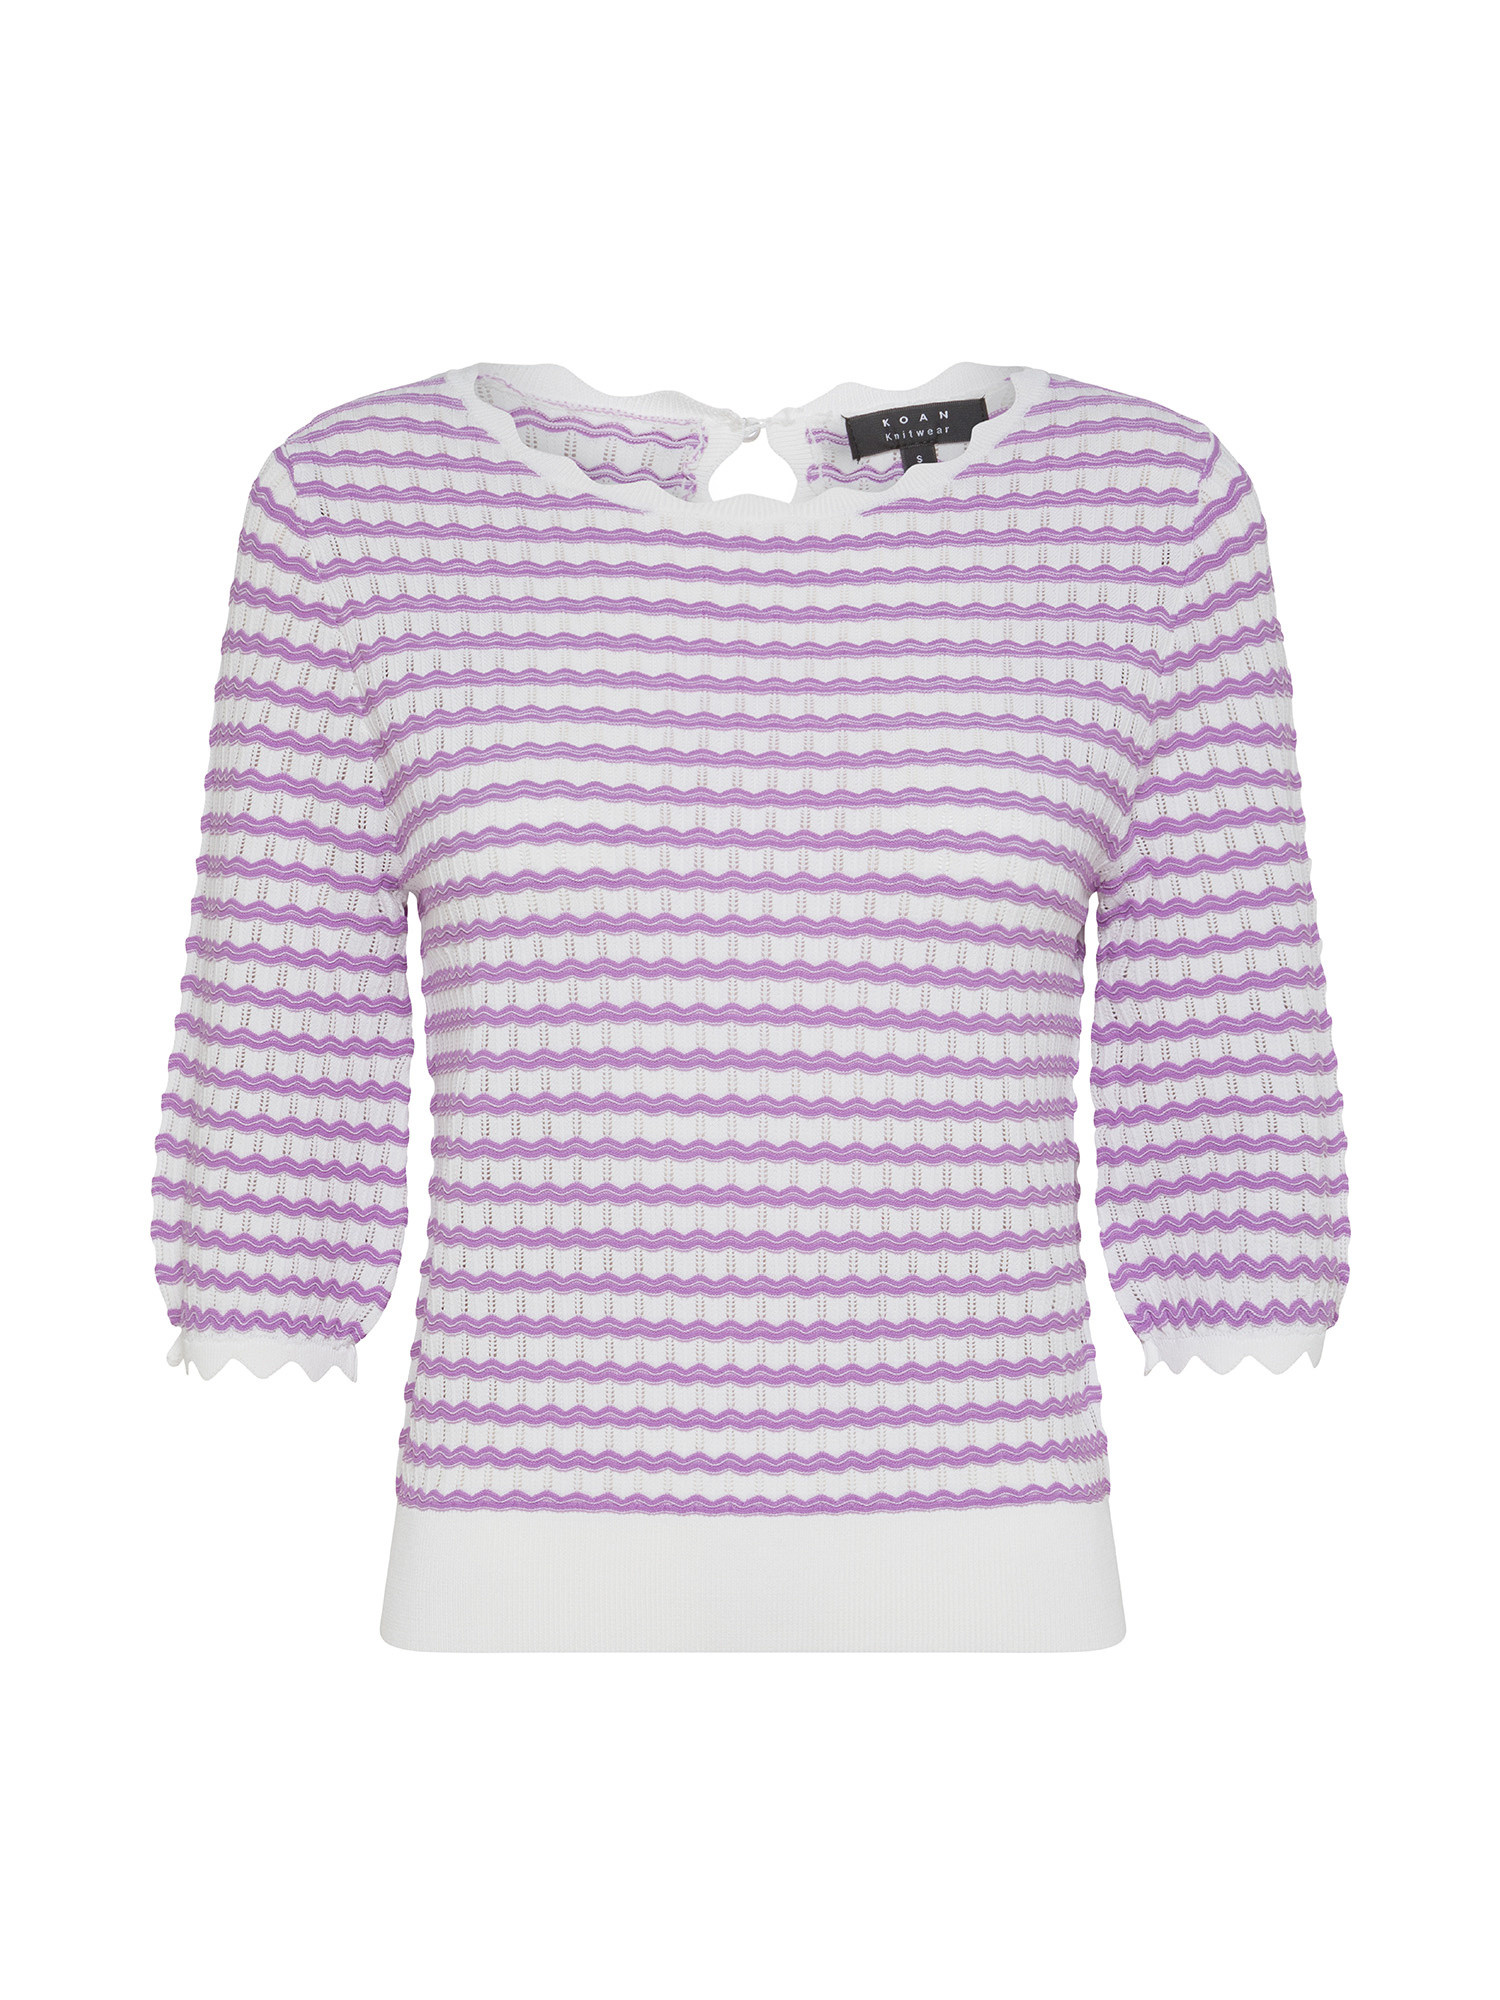 Koan - Wave stitch sweater, Purple Lilac, large image number 0